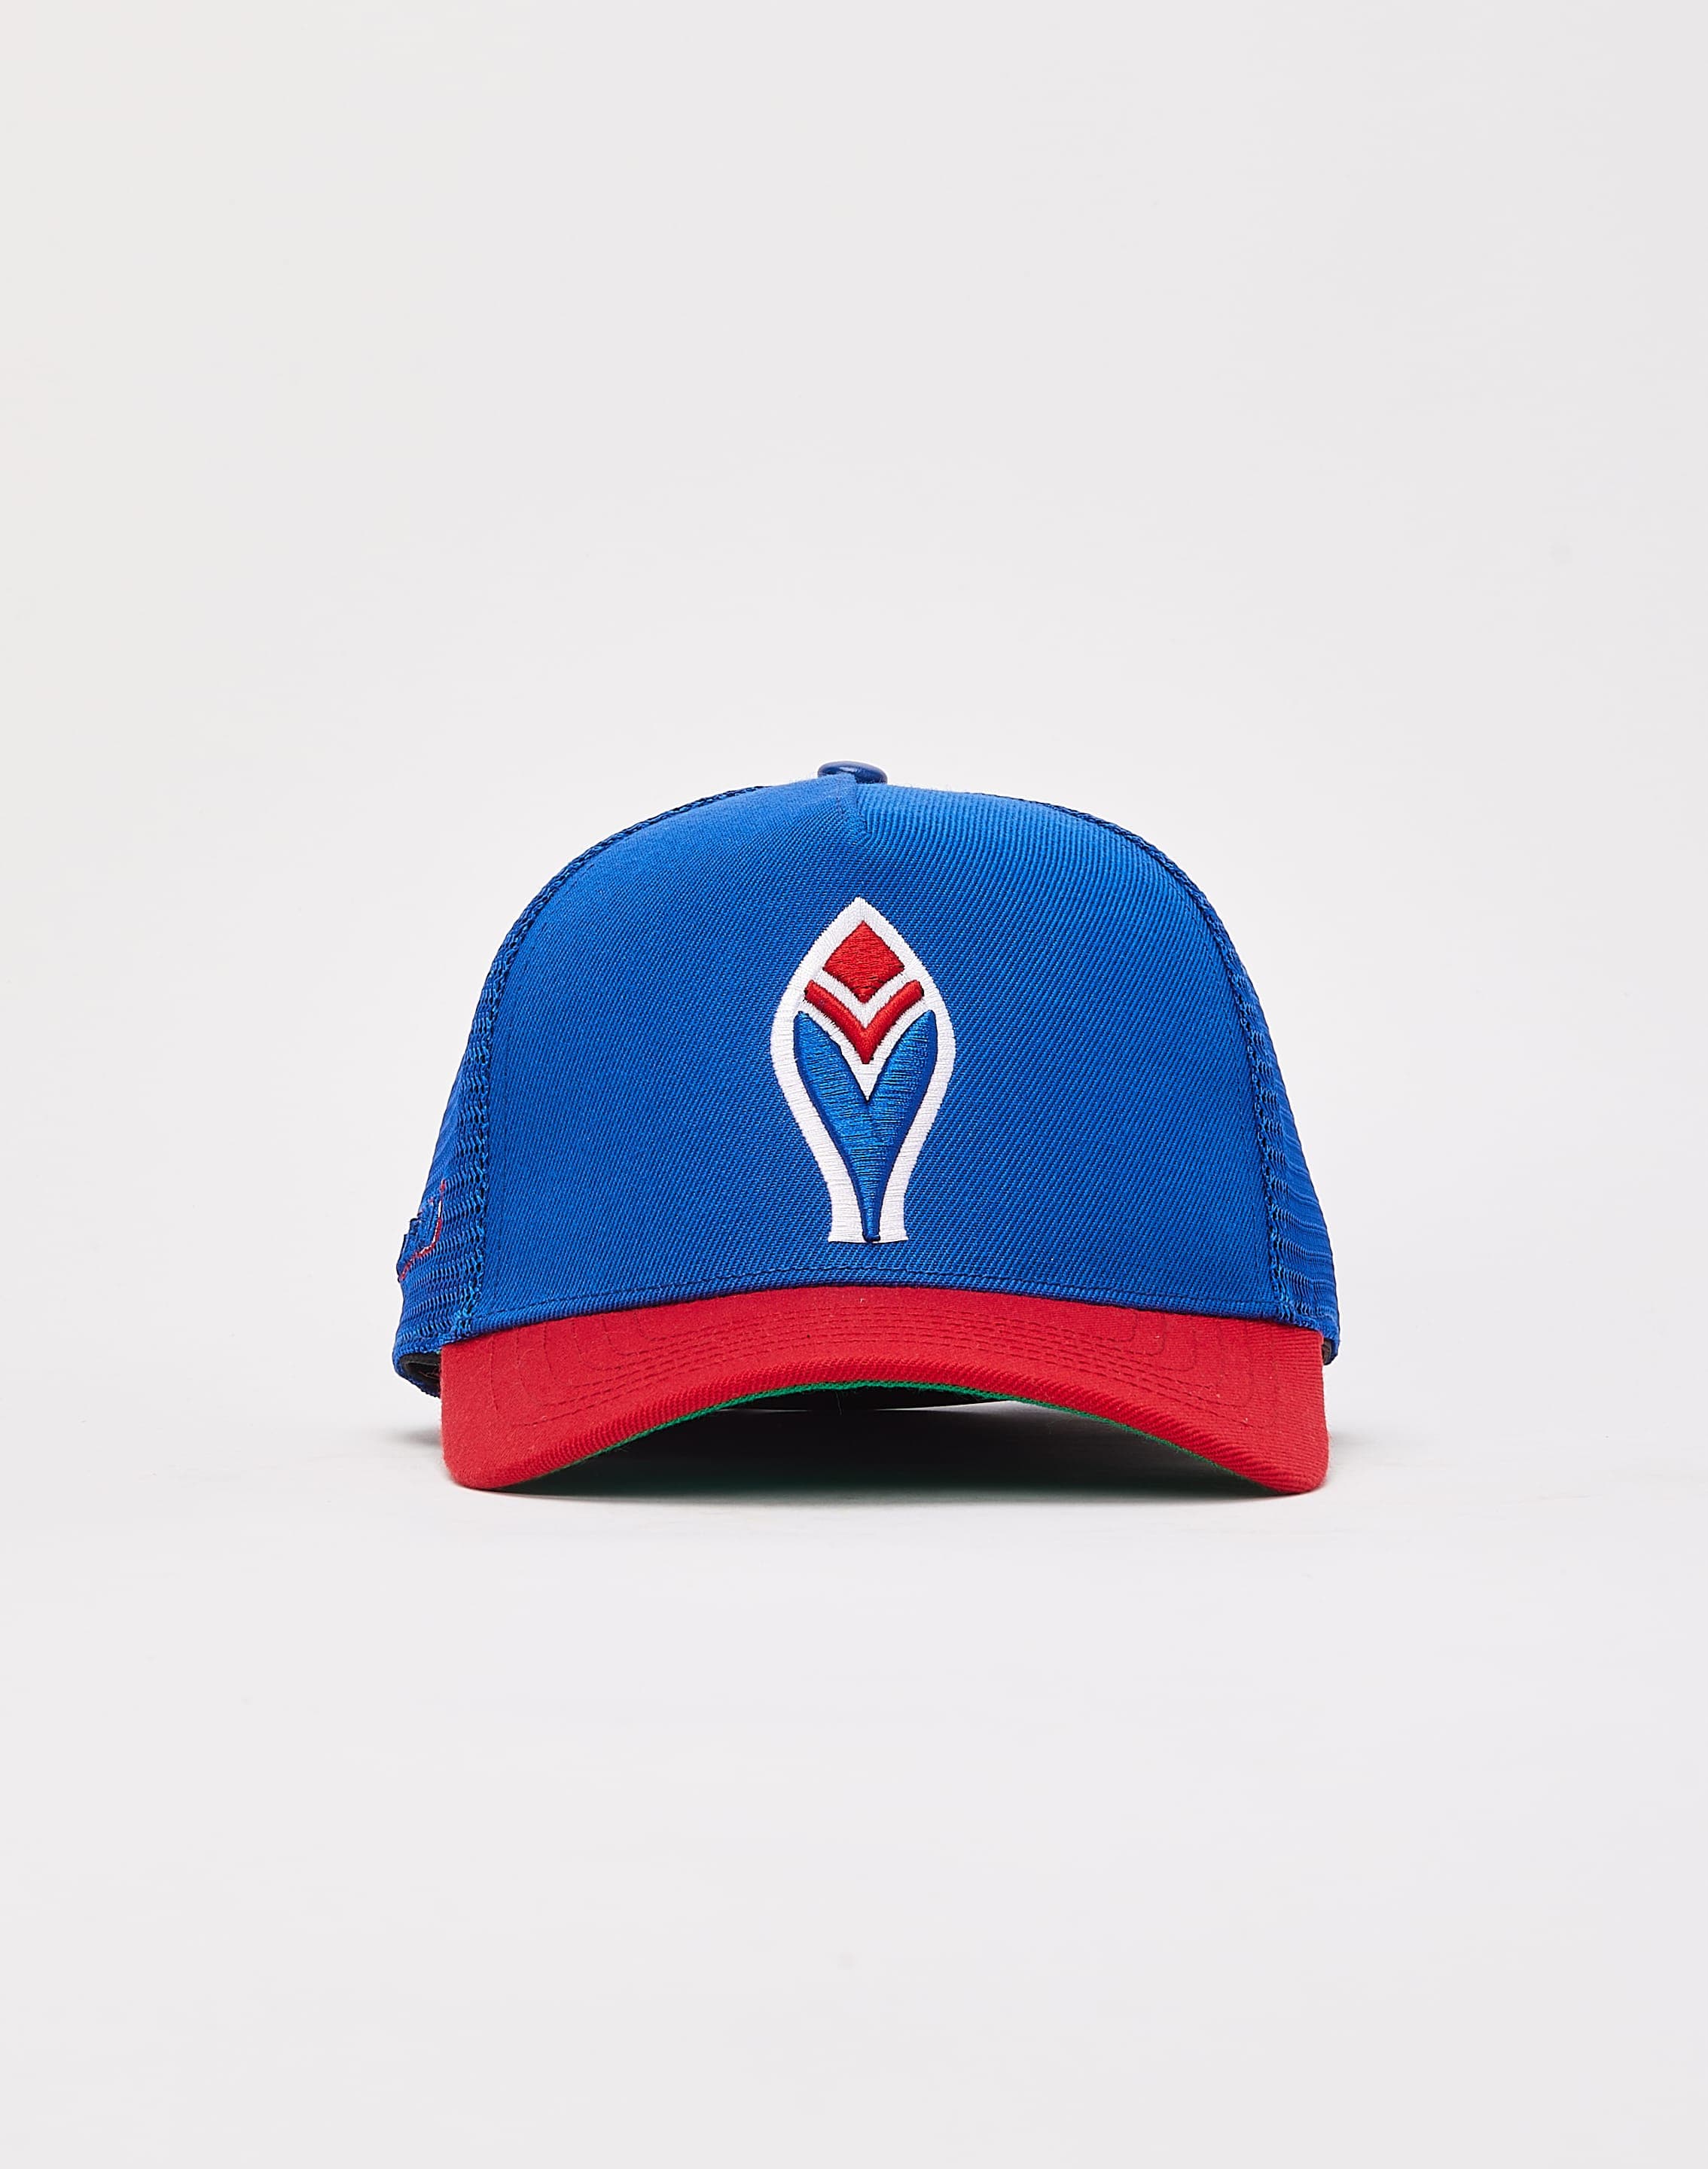 Braves Baseball Vintage Sports Logo Trucker Hat